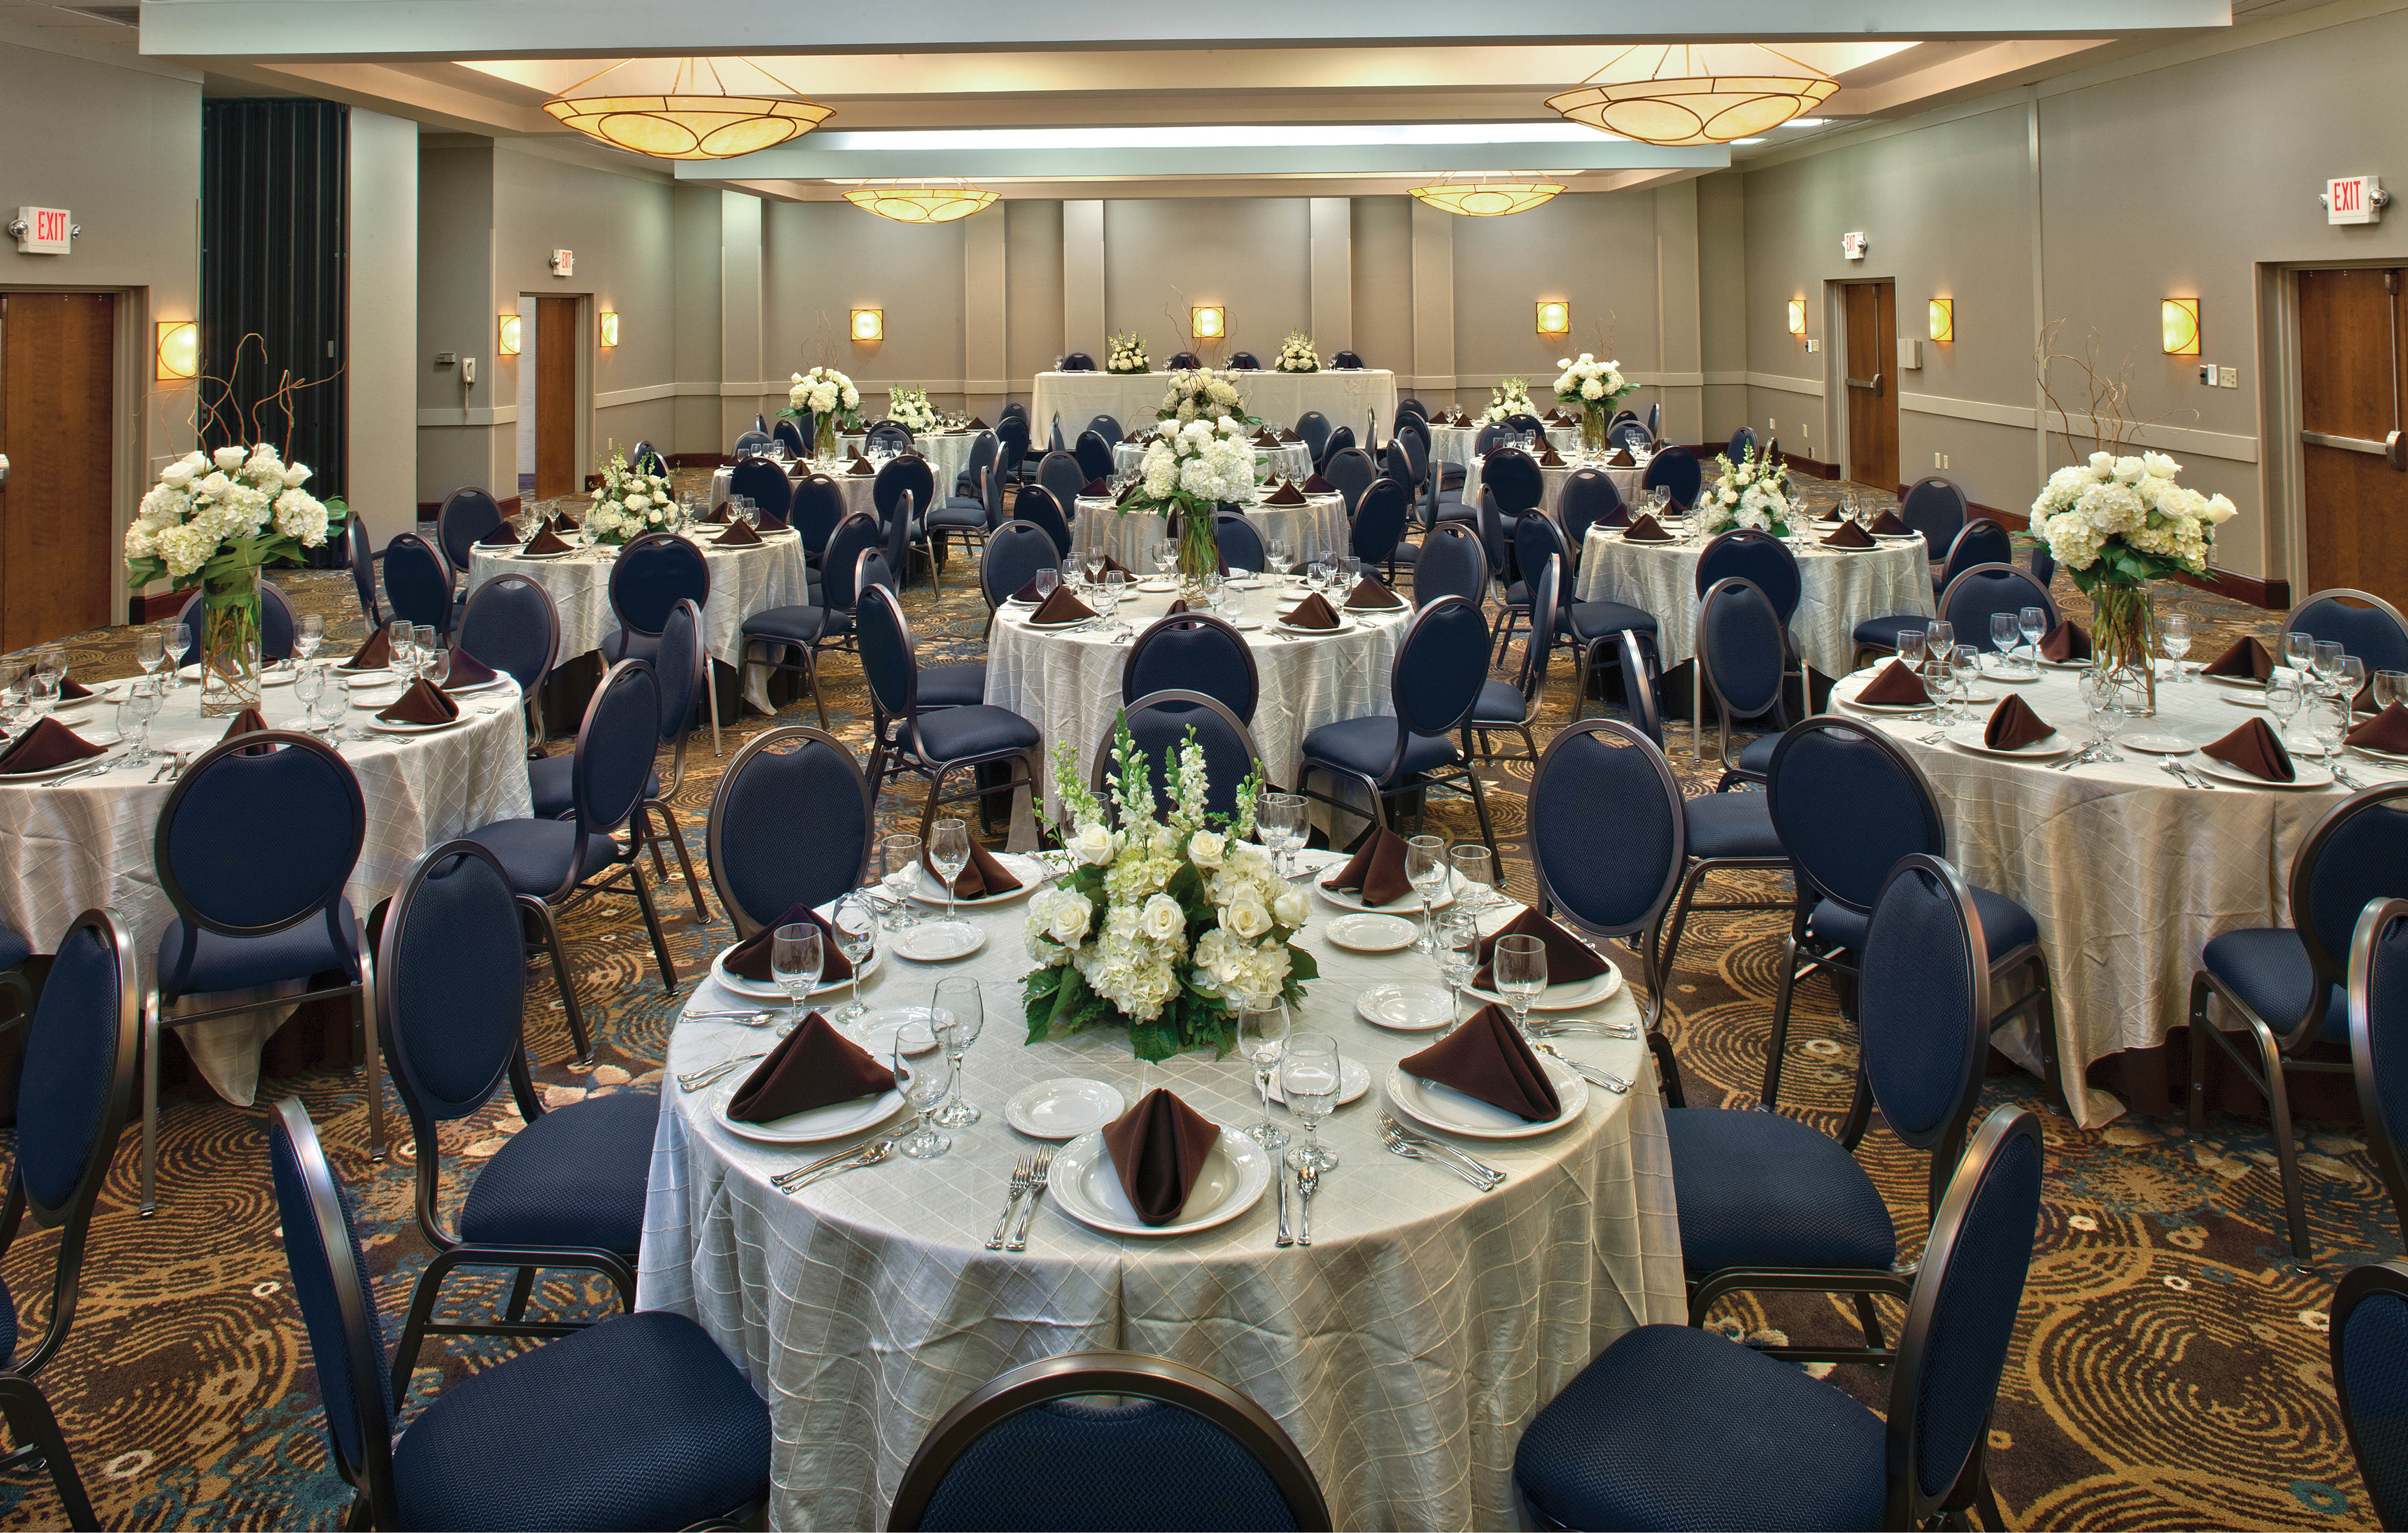 Ballroom Banquet Dining Tables Setup